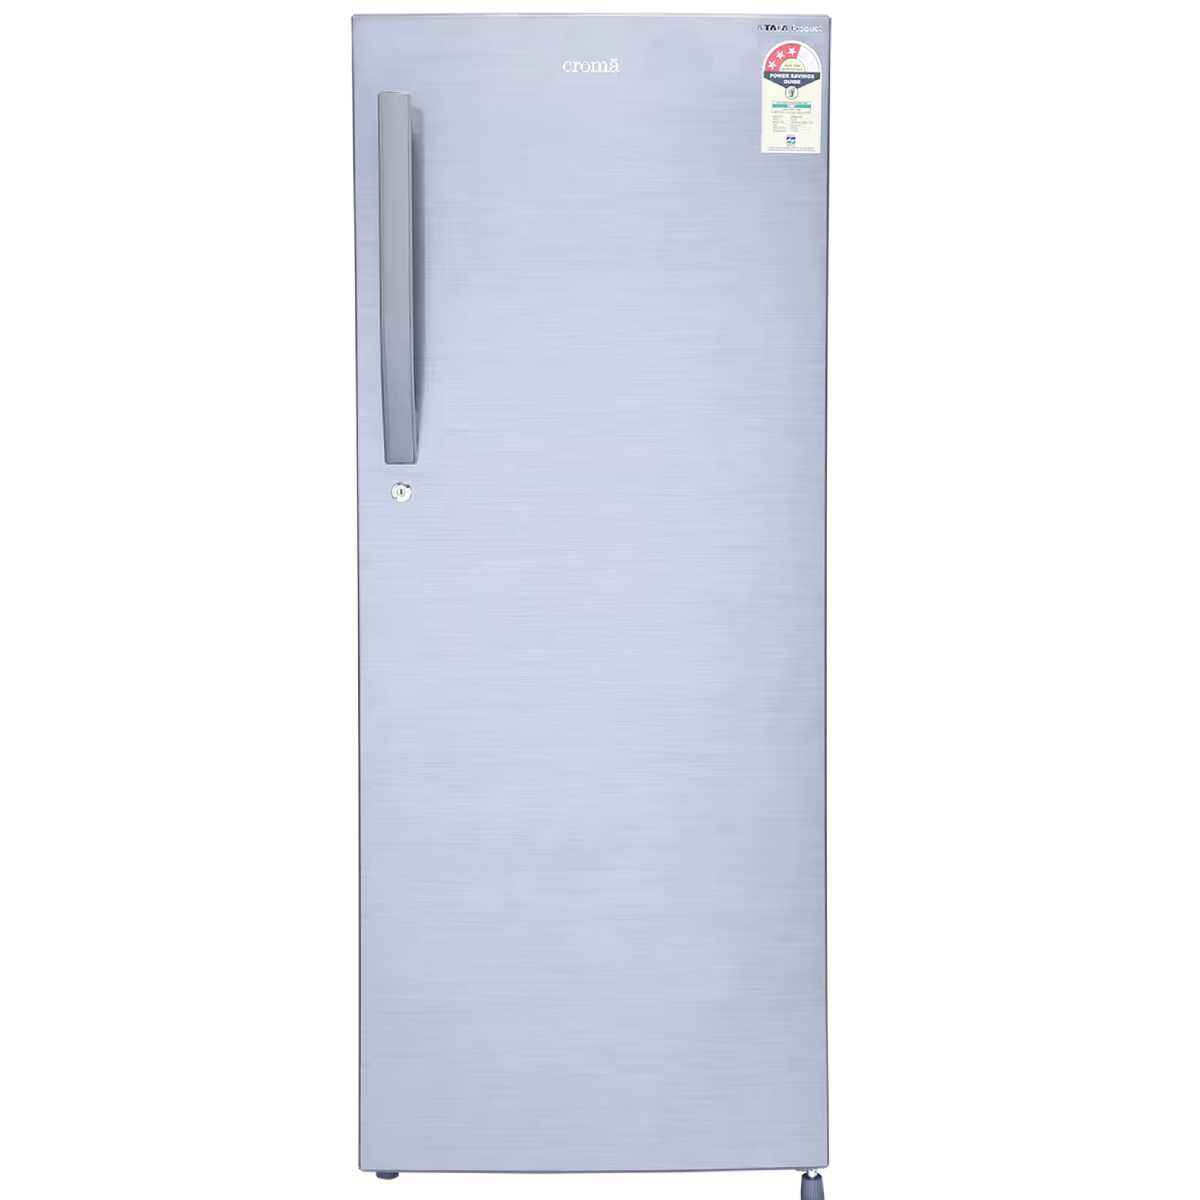 Croma 220 L 3 Star Single Door Refrigerator ( CRLRFC201SD220)